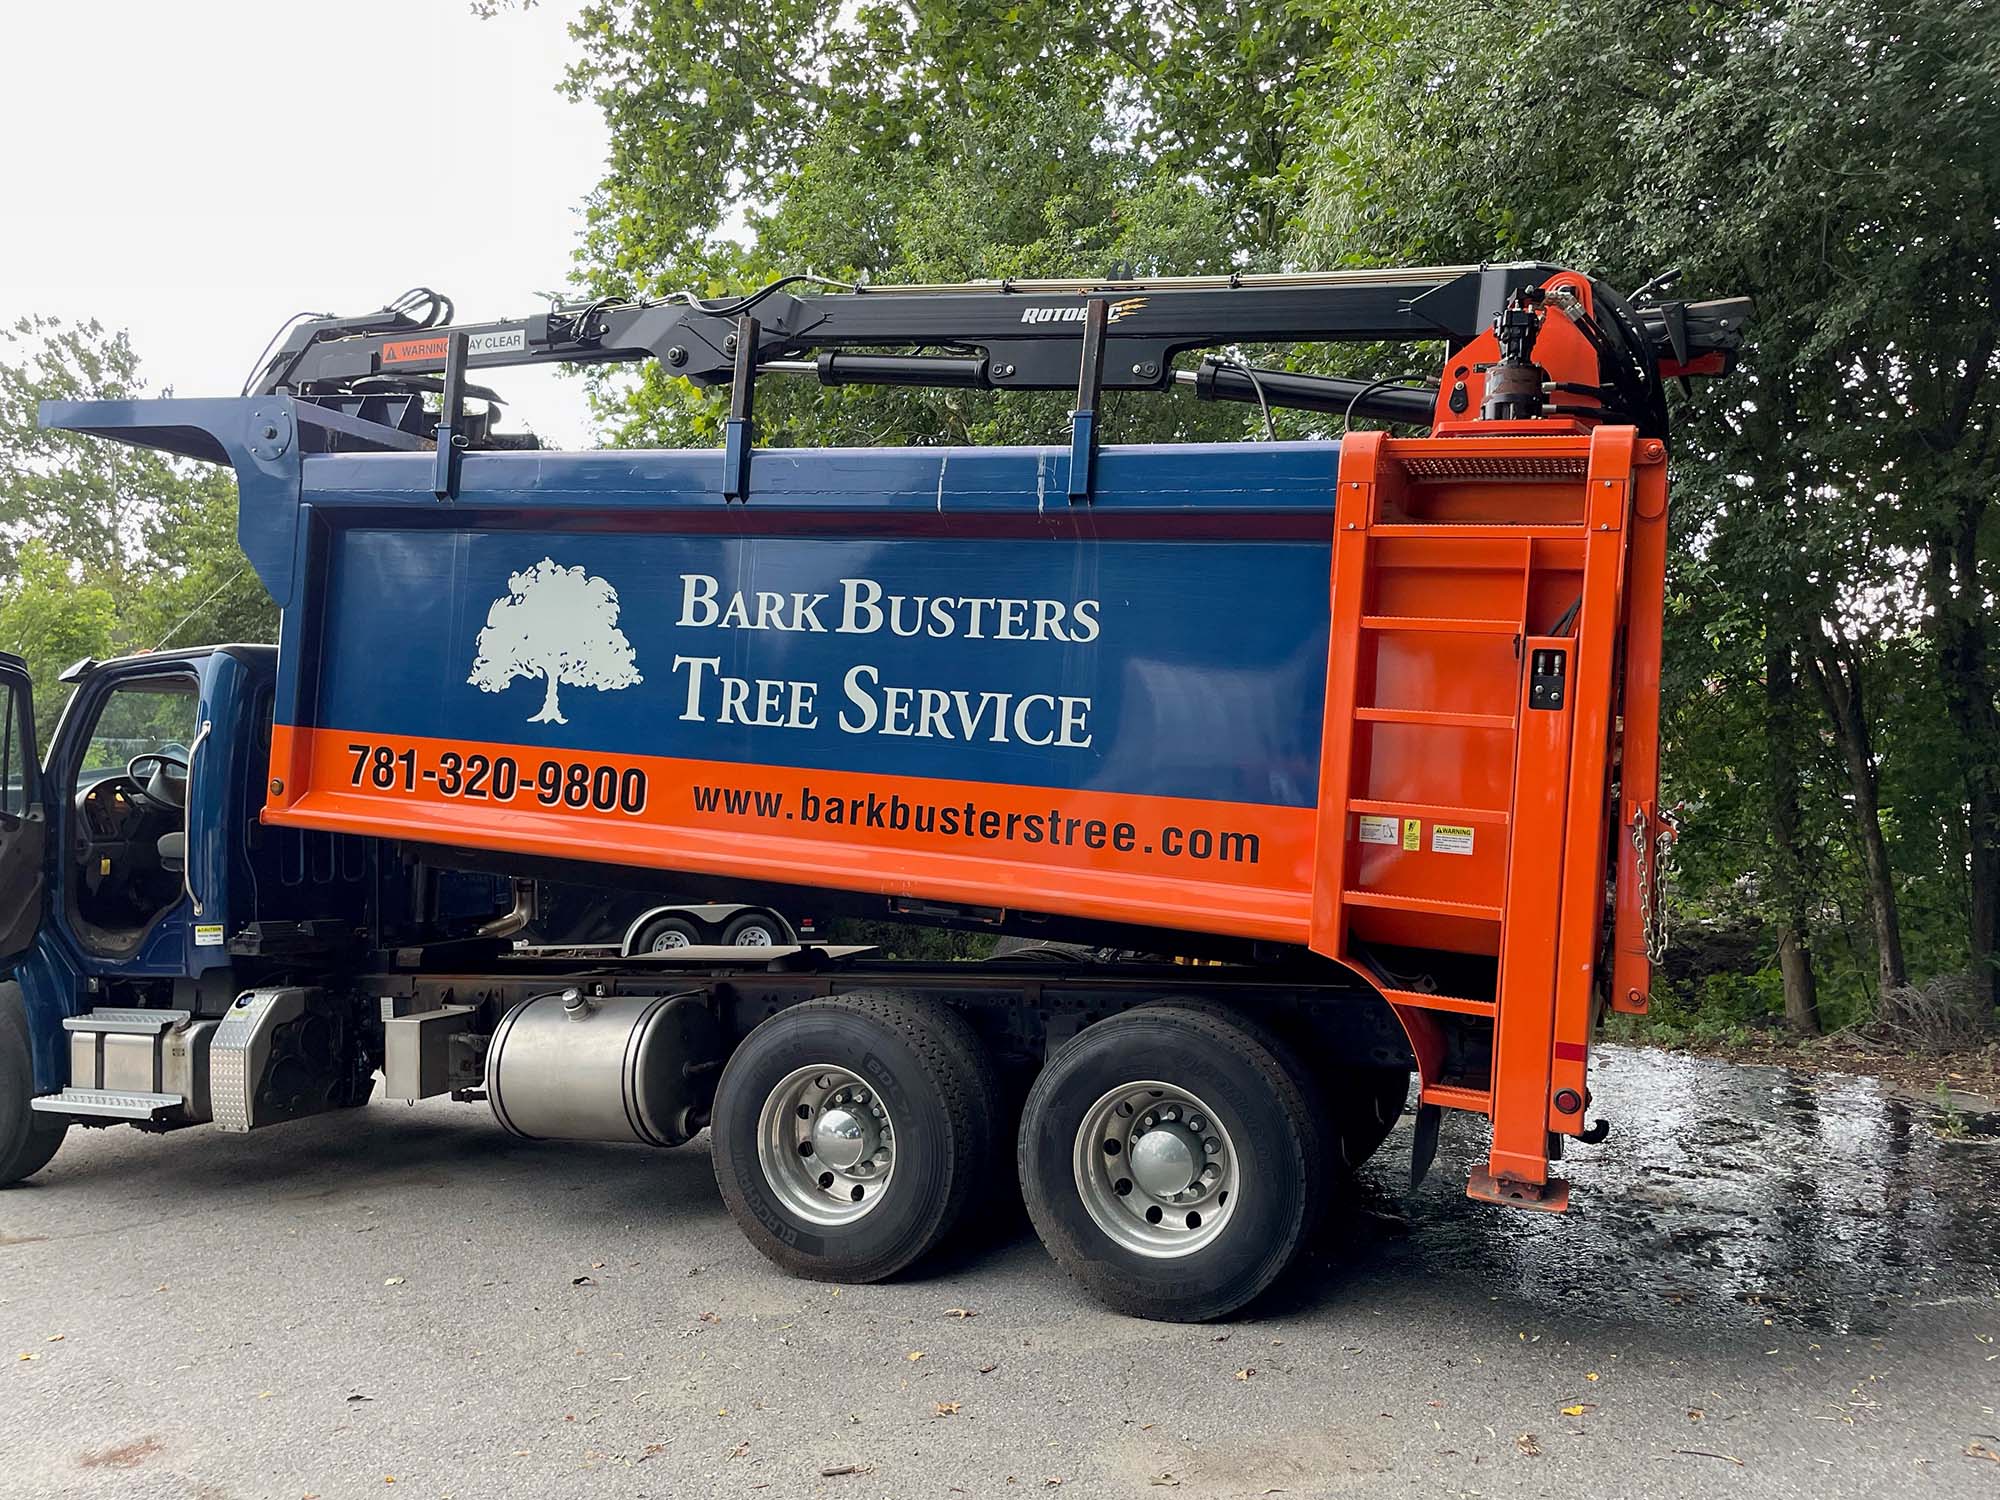 Bark Buster Tree services: Tree Removal, Pruning, Pest Control, Arborist. Westwood Weston Boston, MA Region